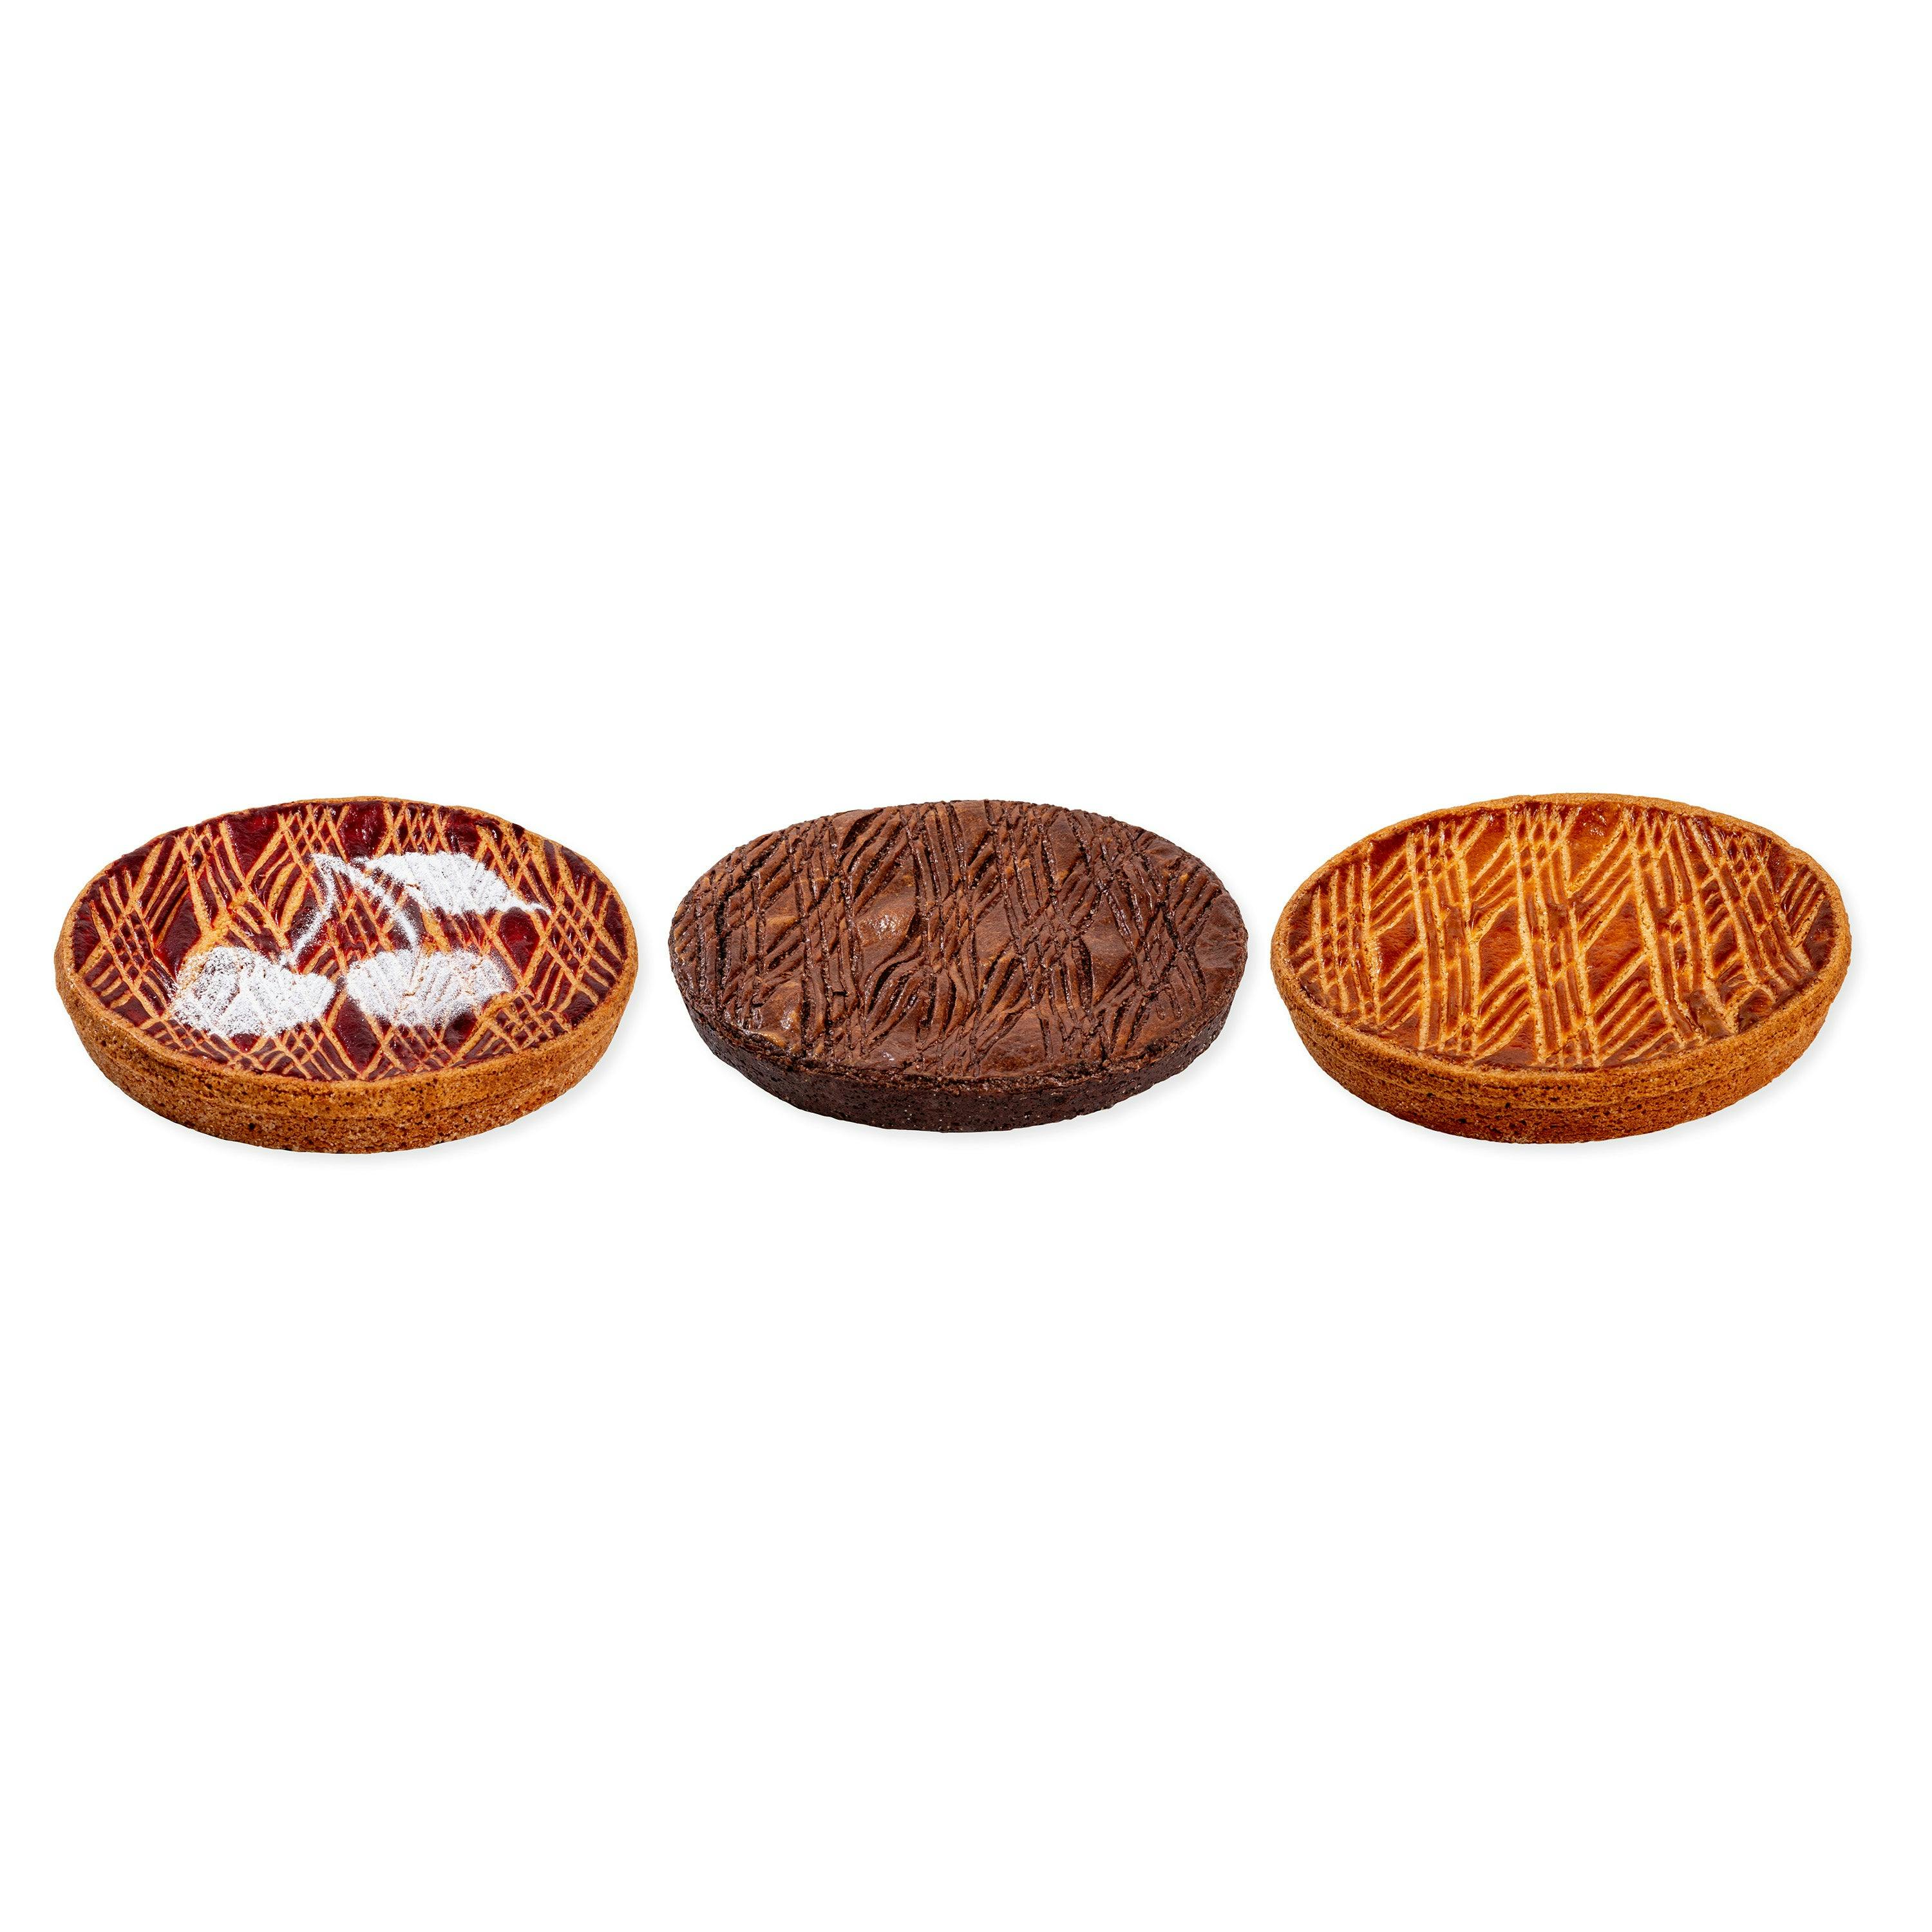 Biscuits - Vincent Vallée chocolatier champion du monde